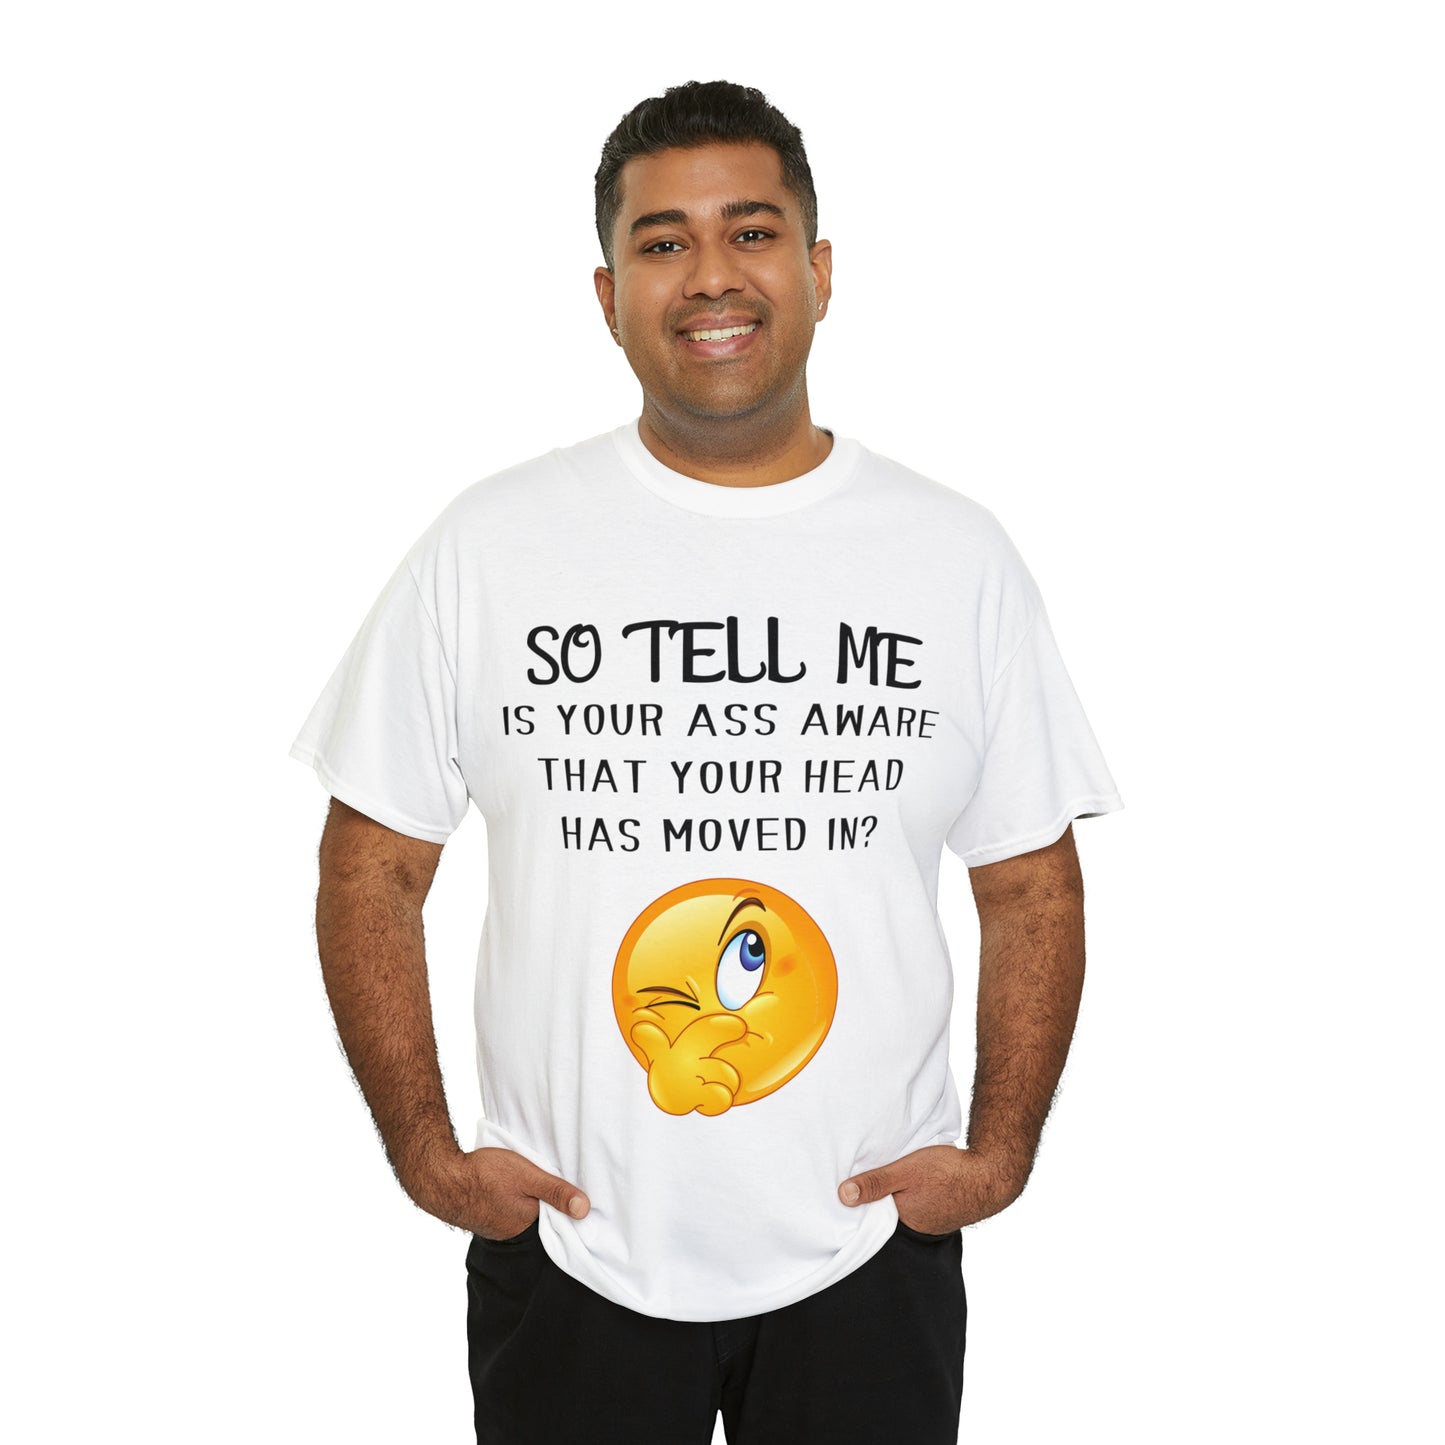 Funny Sarcastic Shirt, Funny Shirt for Men, Fathers Day Gift, Husband Gift, Humor T-shirt, Dad Gift,  Men's Shirt